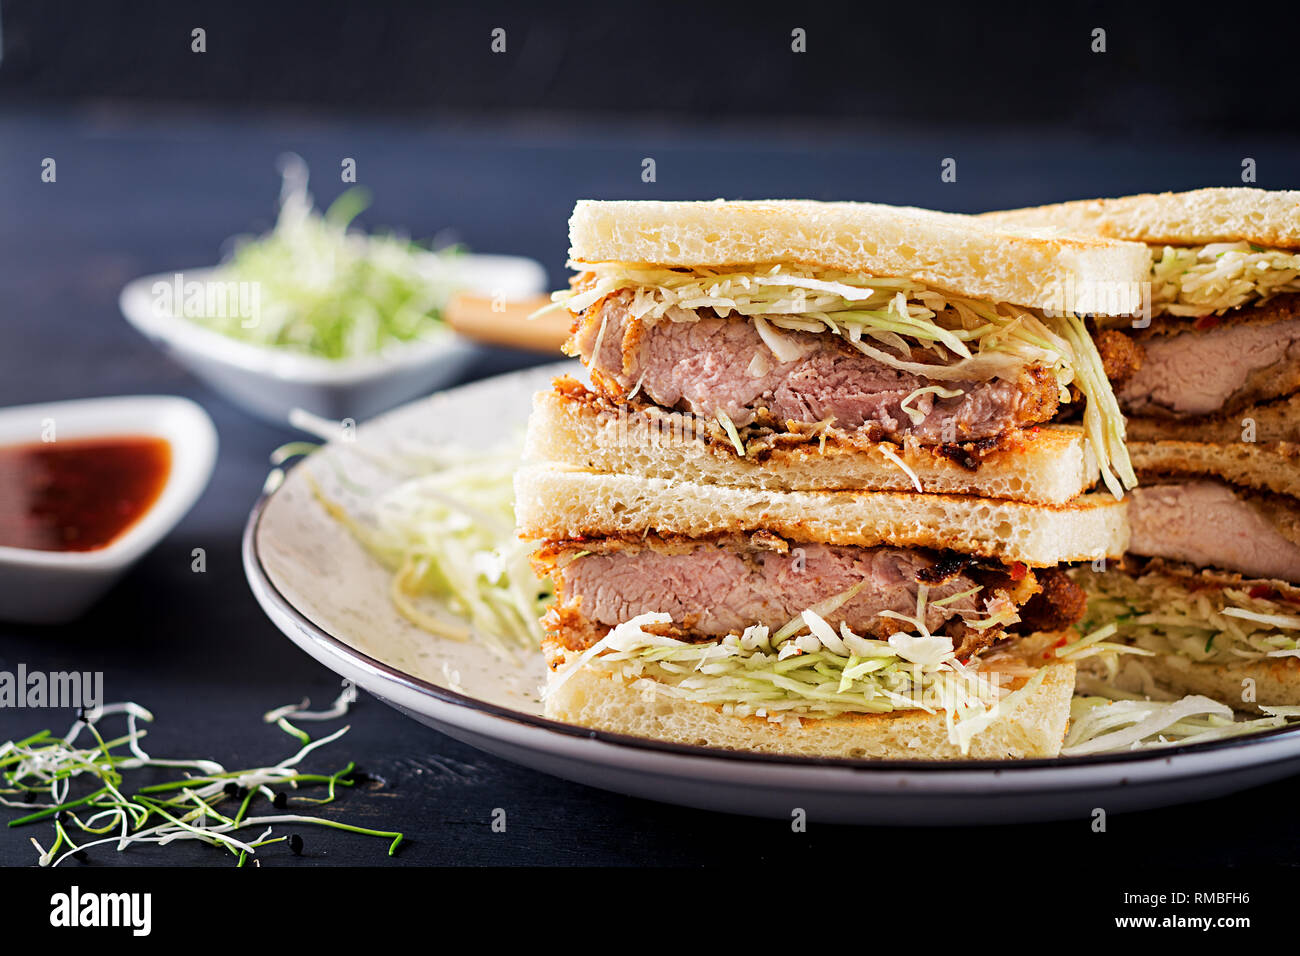 Katsu Sando - food trend japanese sandwich with breaded pork chop, cabbage and tonkatsu sauce. Japanese cuisine. Stock Photo